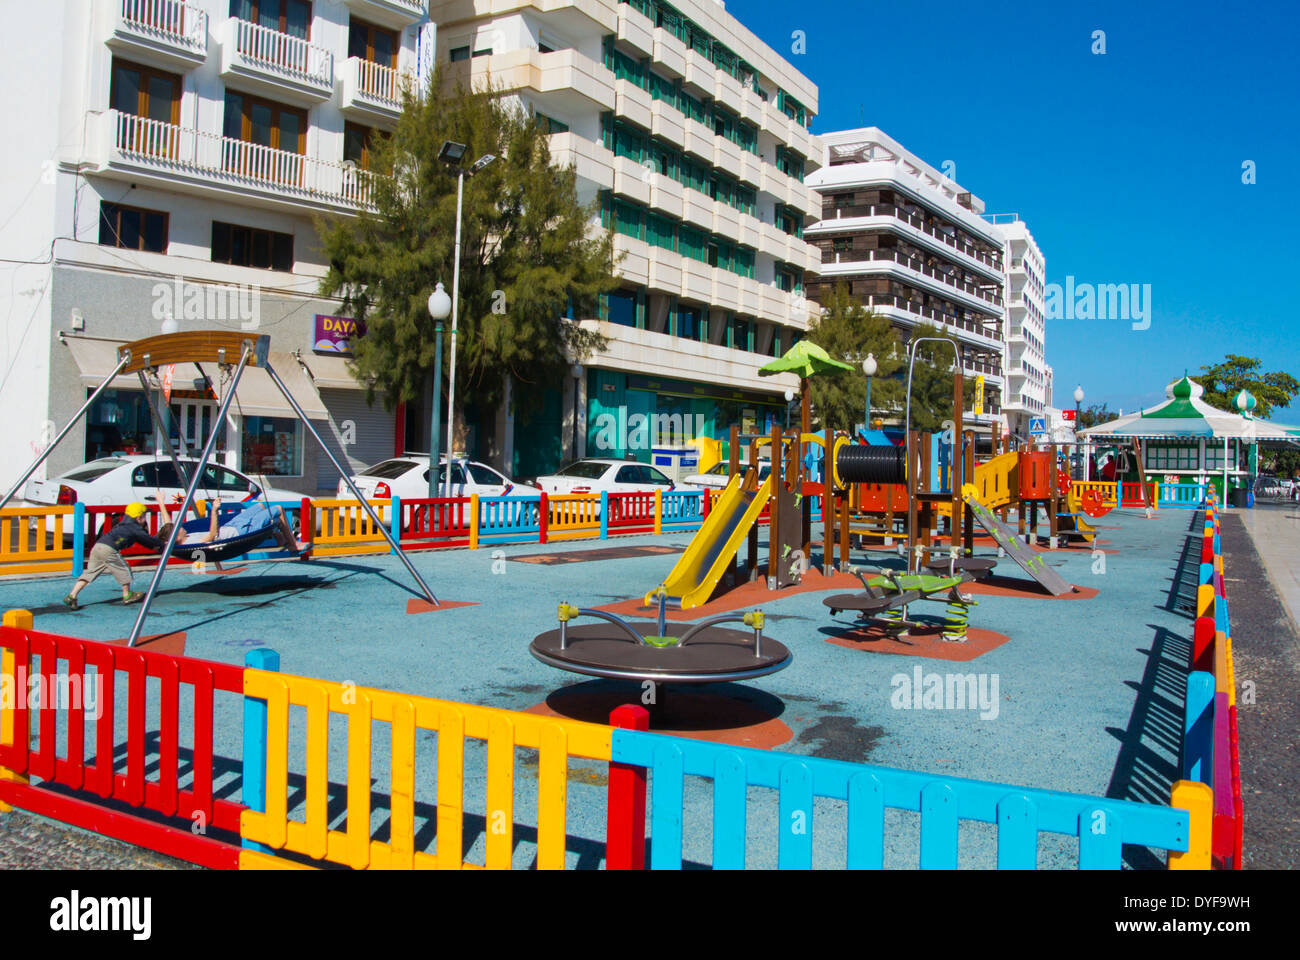 Childrens playground, La Marina seaside street, Arrecife, Lanzarote, Canary Islands, Spain, Europe Stock Photo